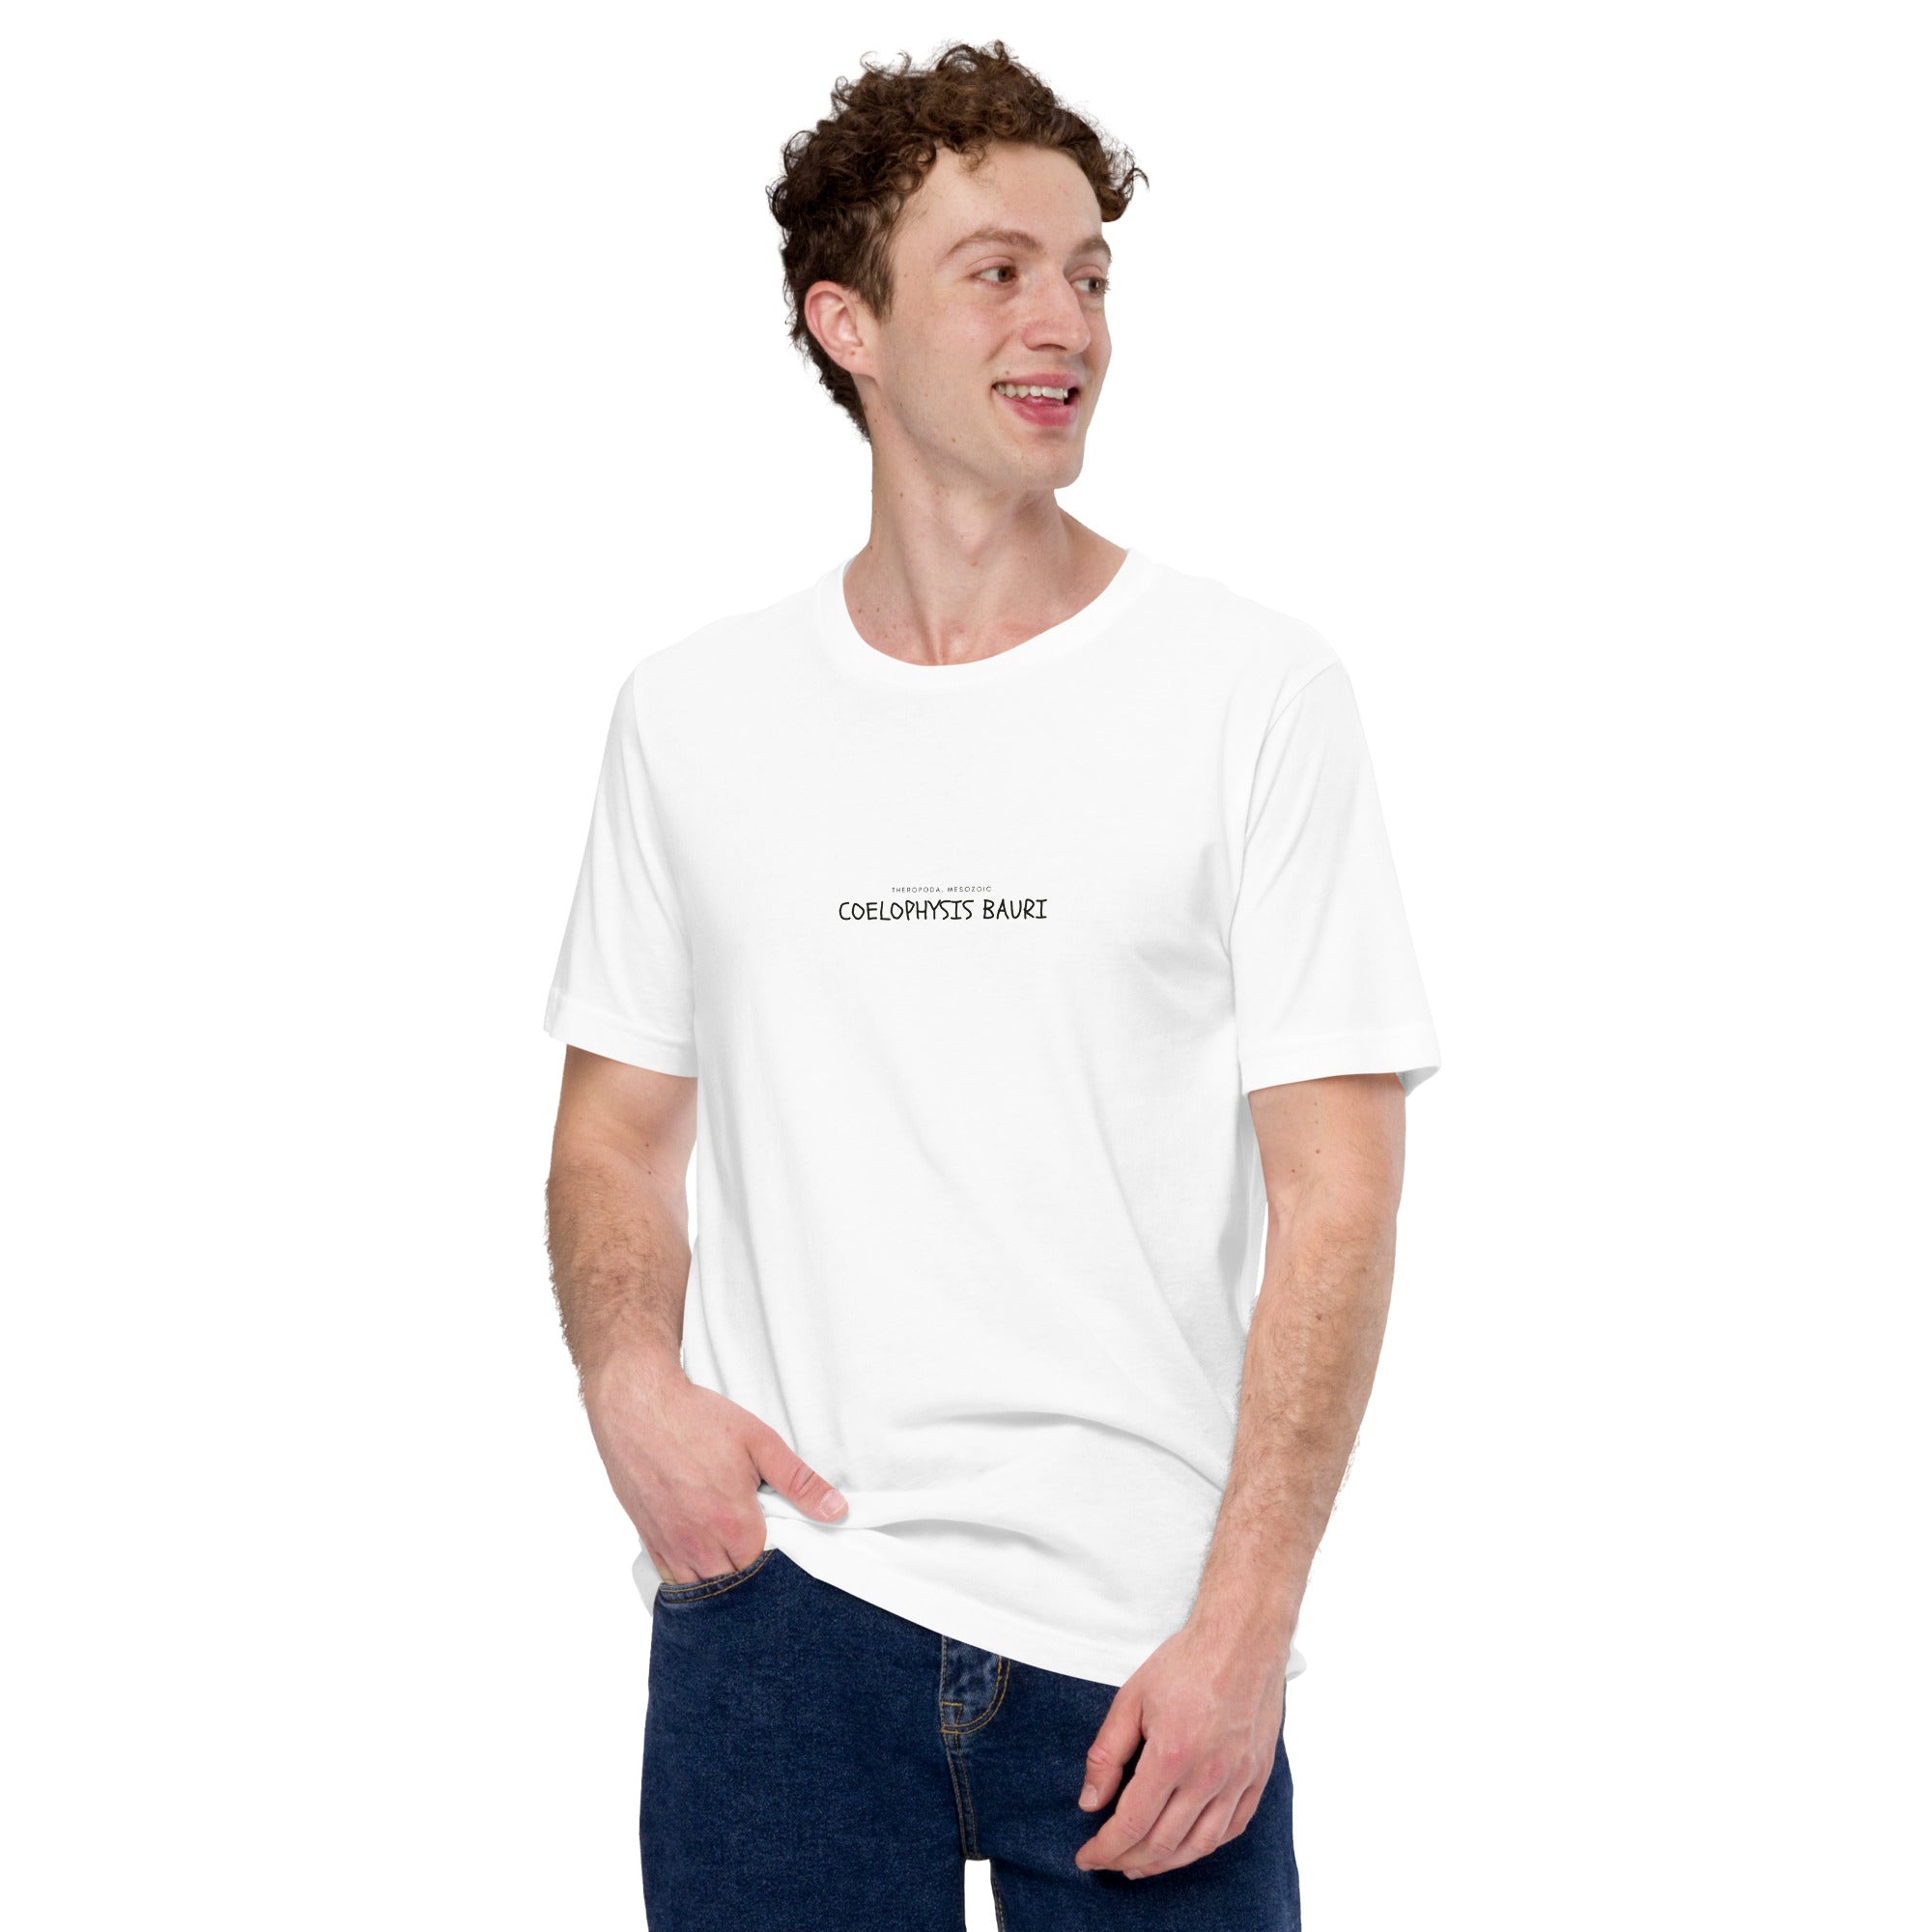 Camiseta unisex con texto "Coelophysis bauri"